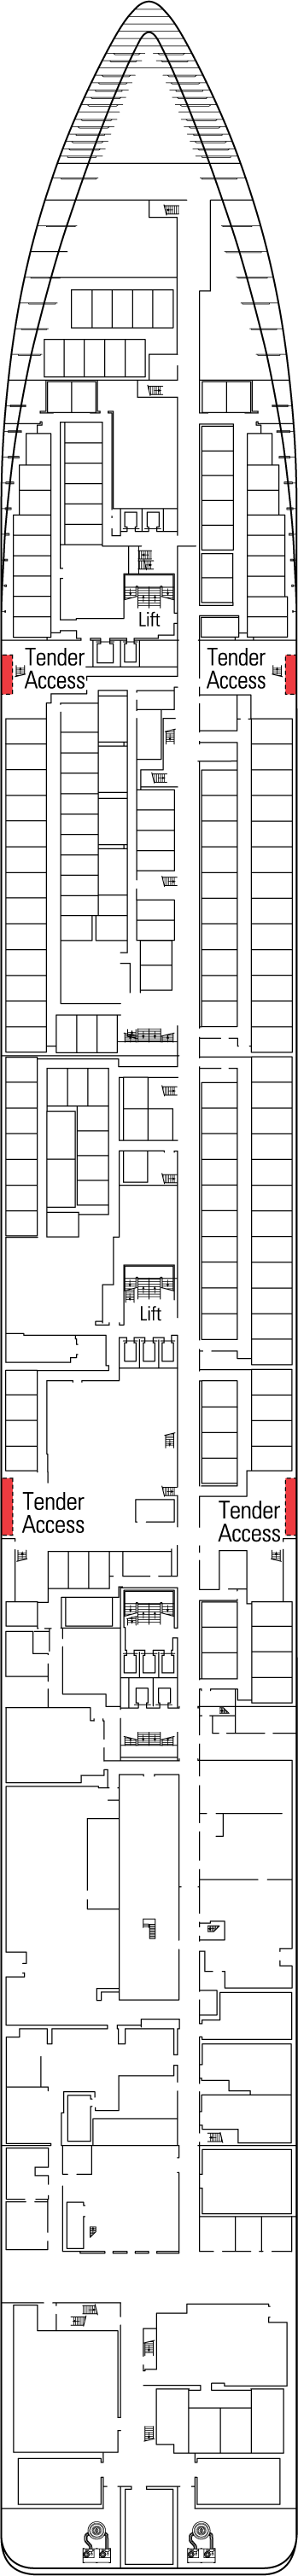 Taormina Deck Plan